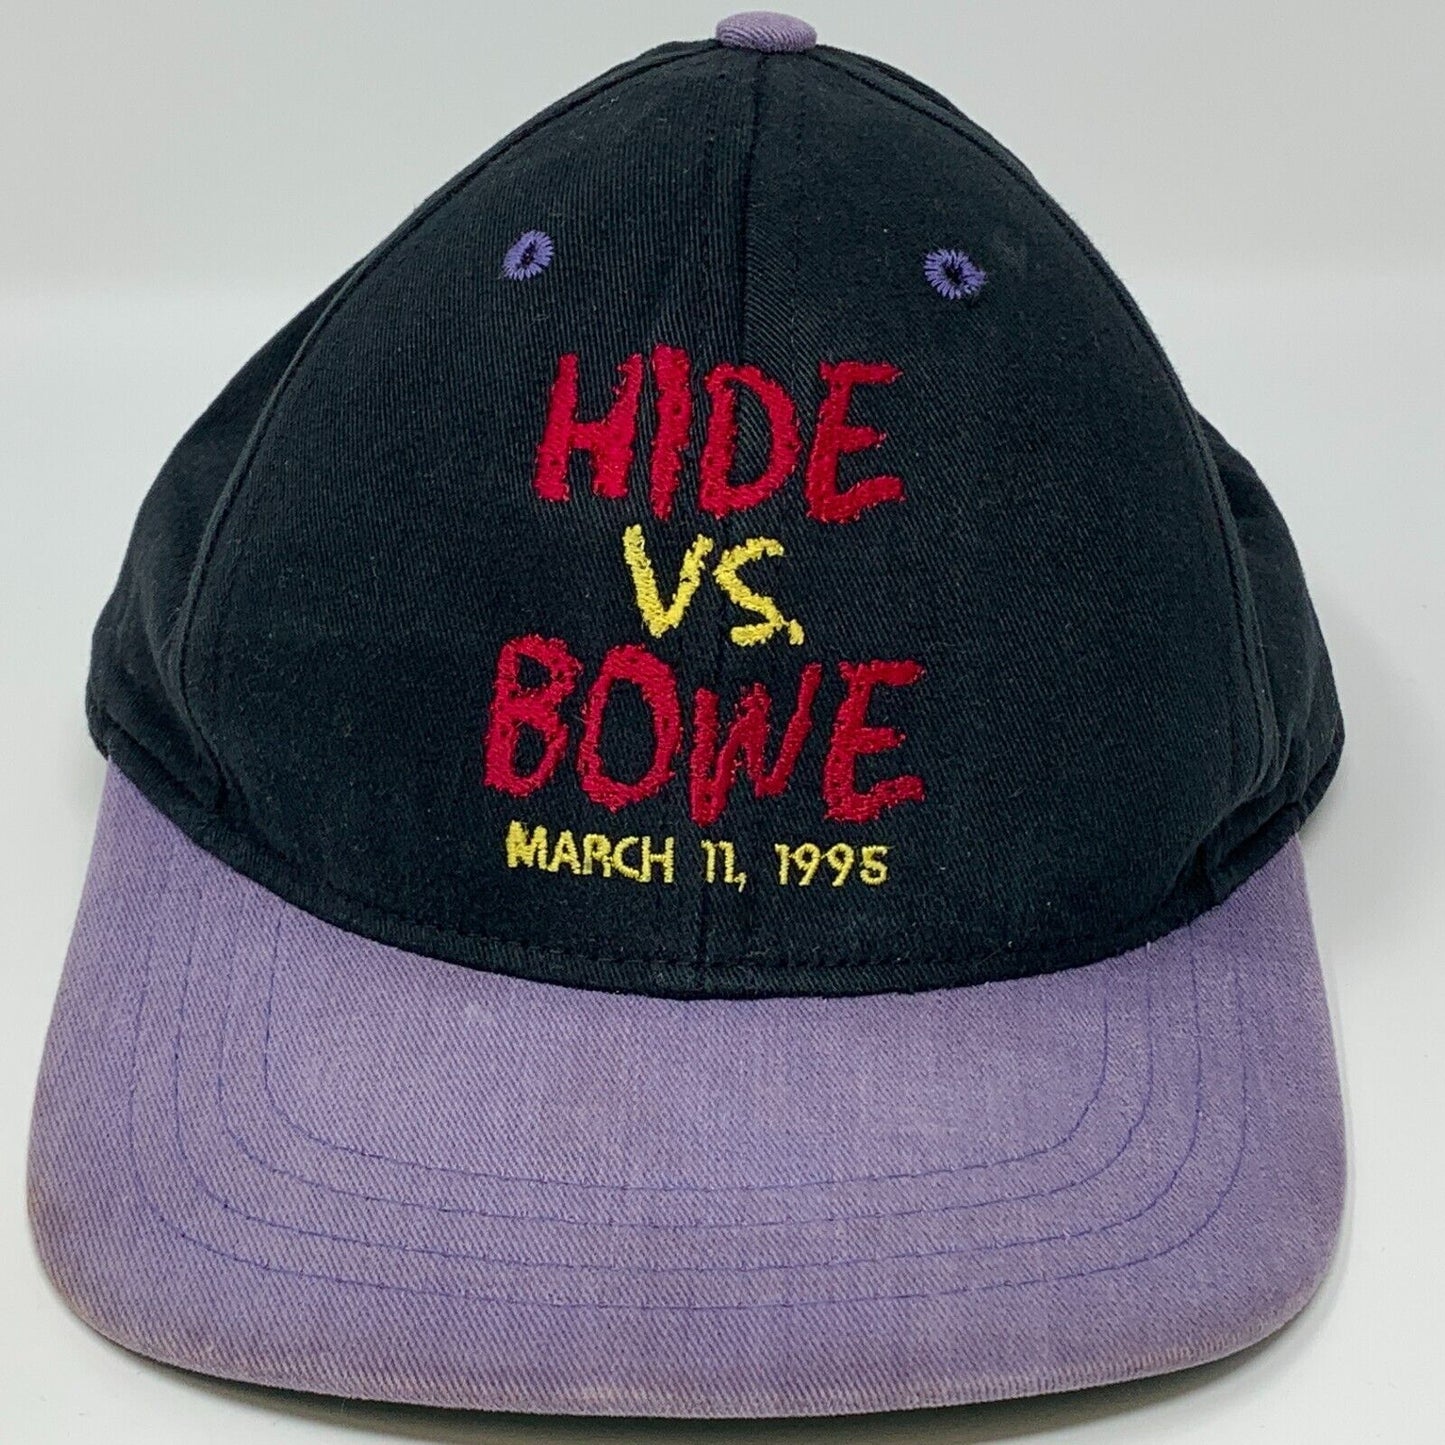 Riddick Bowe Vs Herbie Hide Snapback Hat Vintage 90s 1995 Boxing Baseball Cap